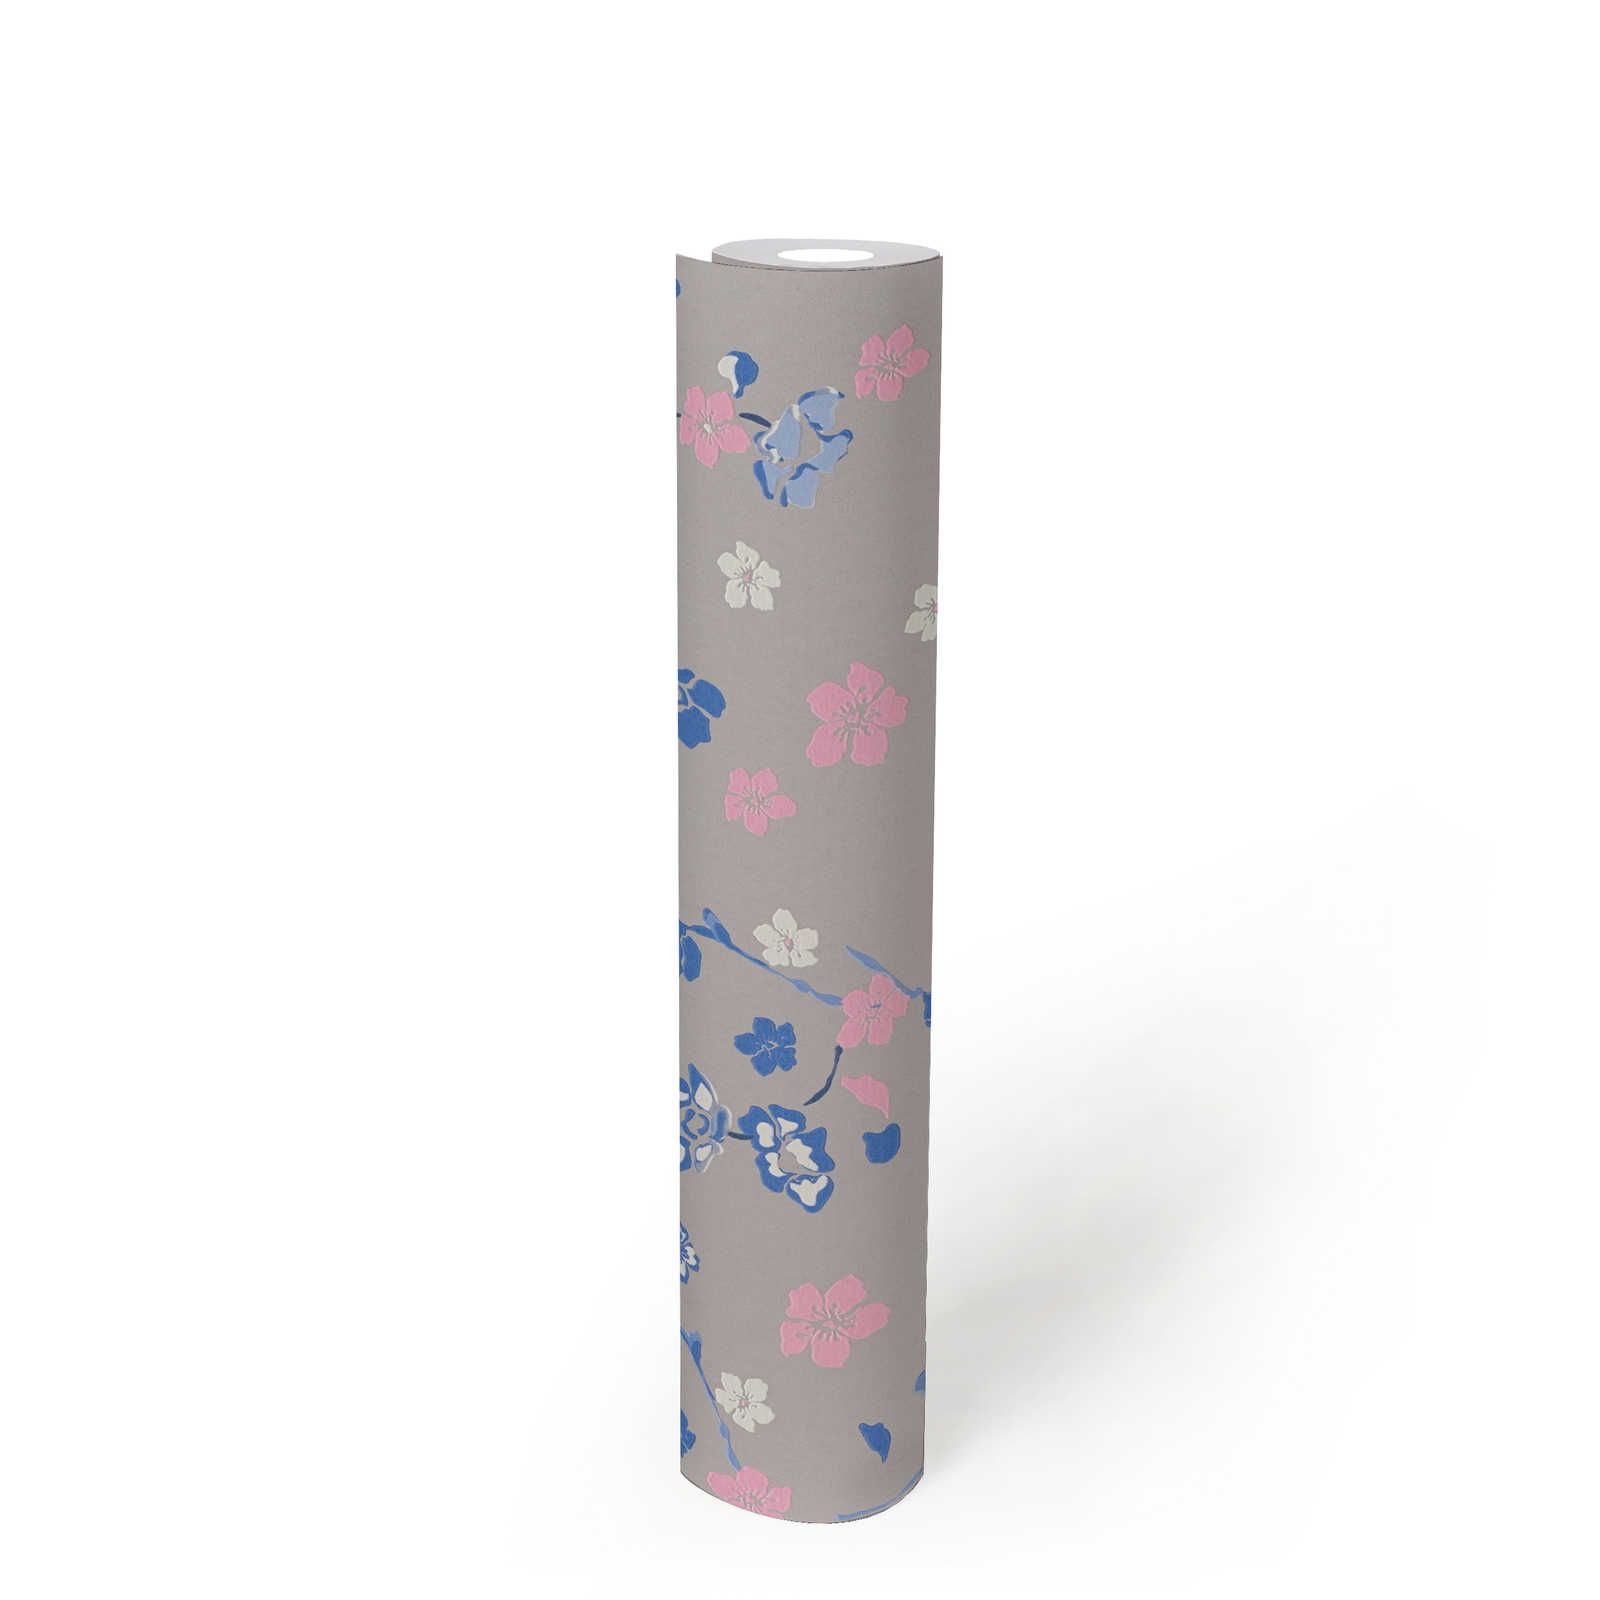             Blumenmuster Tapete mit Glanzeffekt – Grau, Blau, Rosa
        